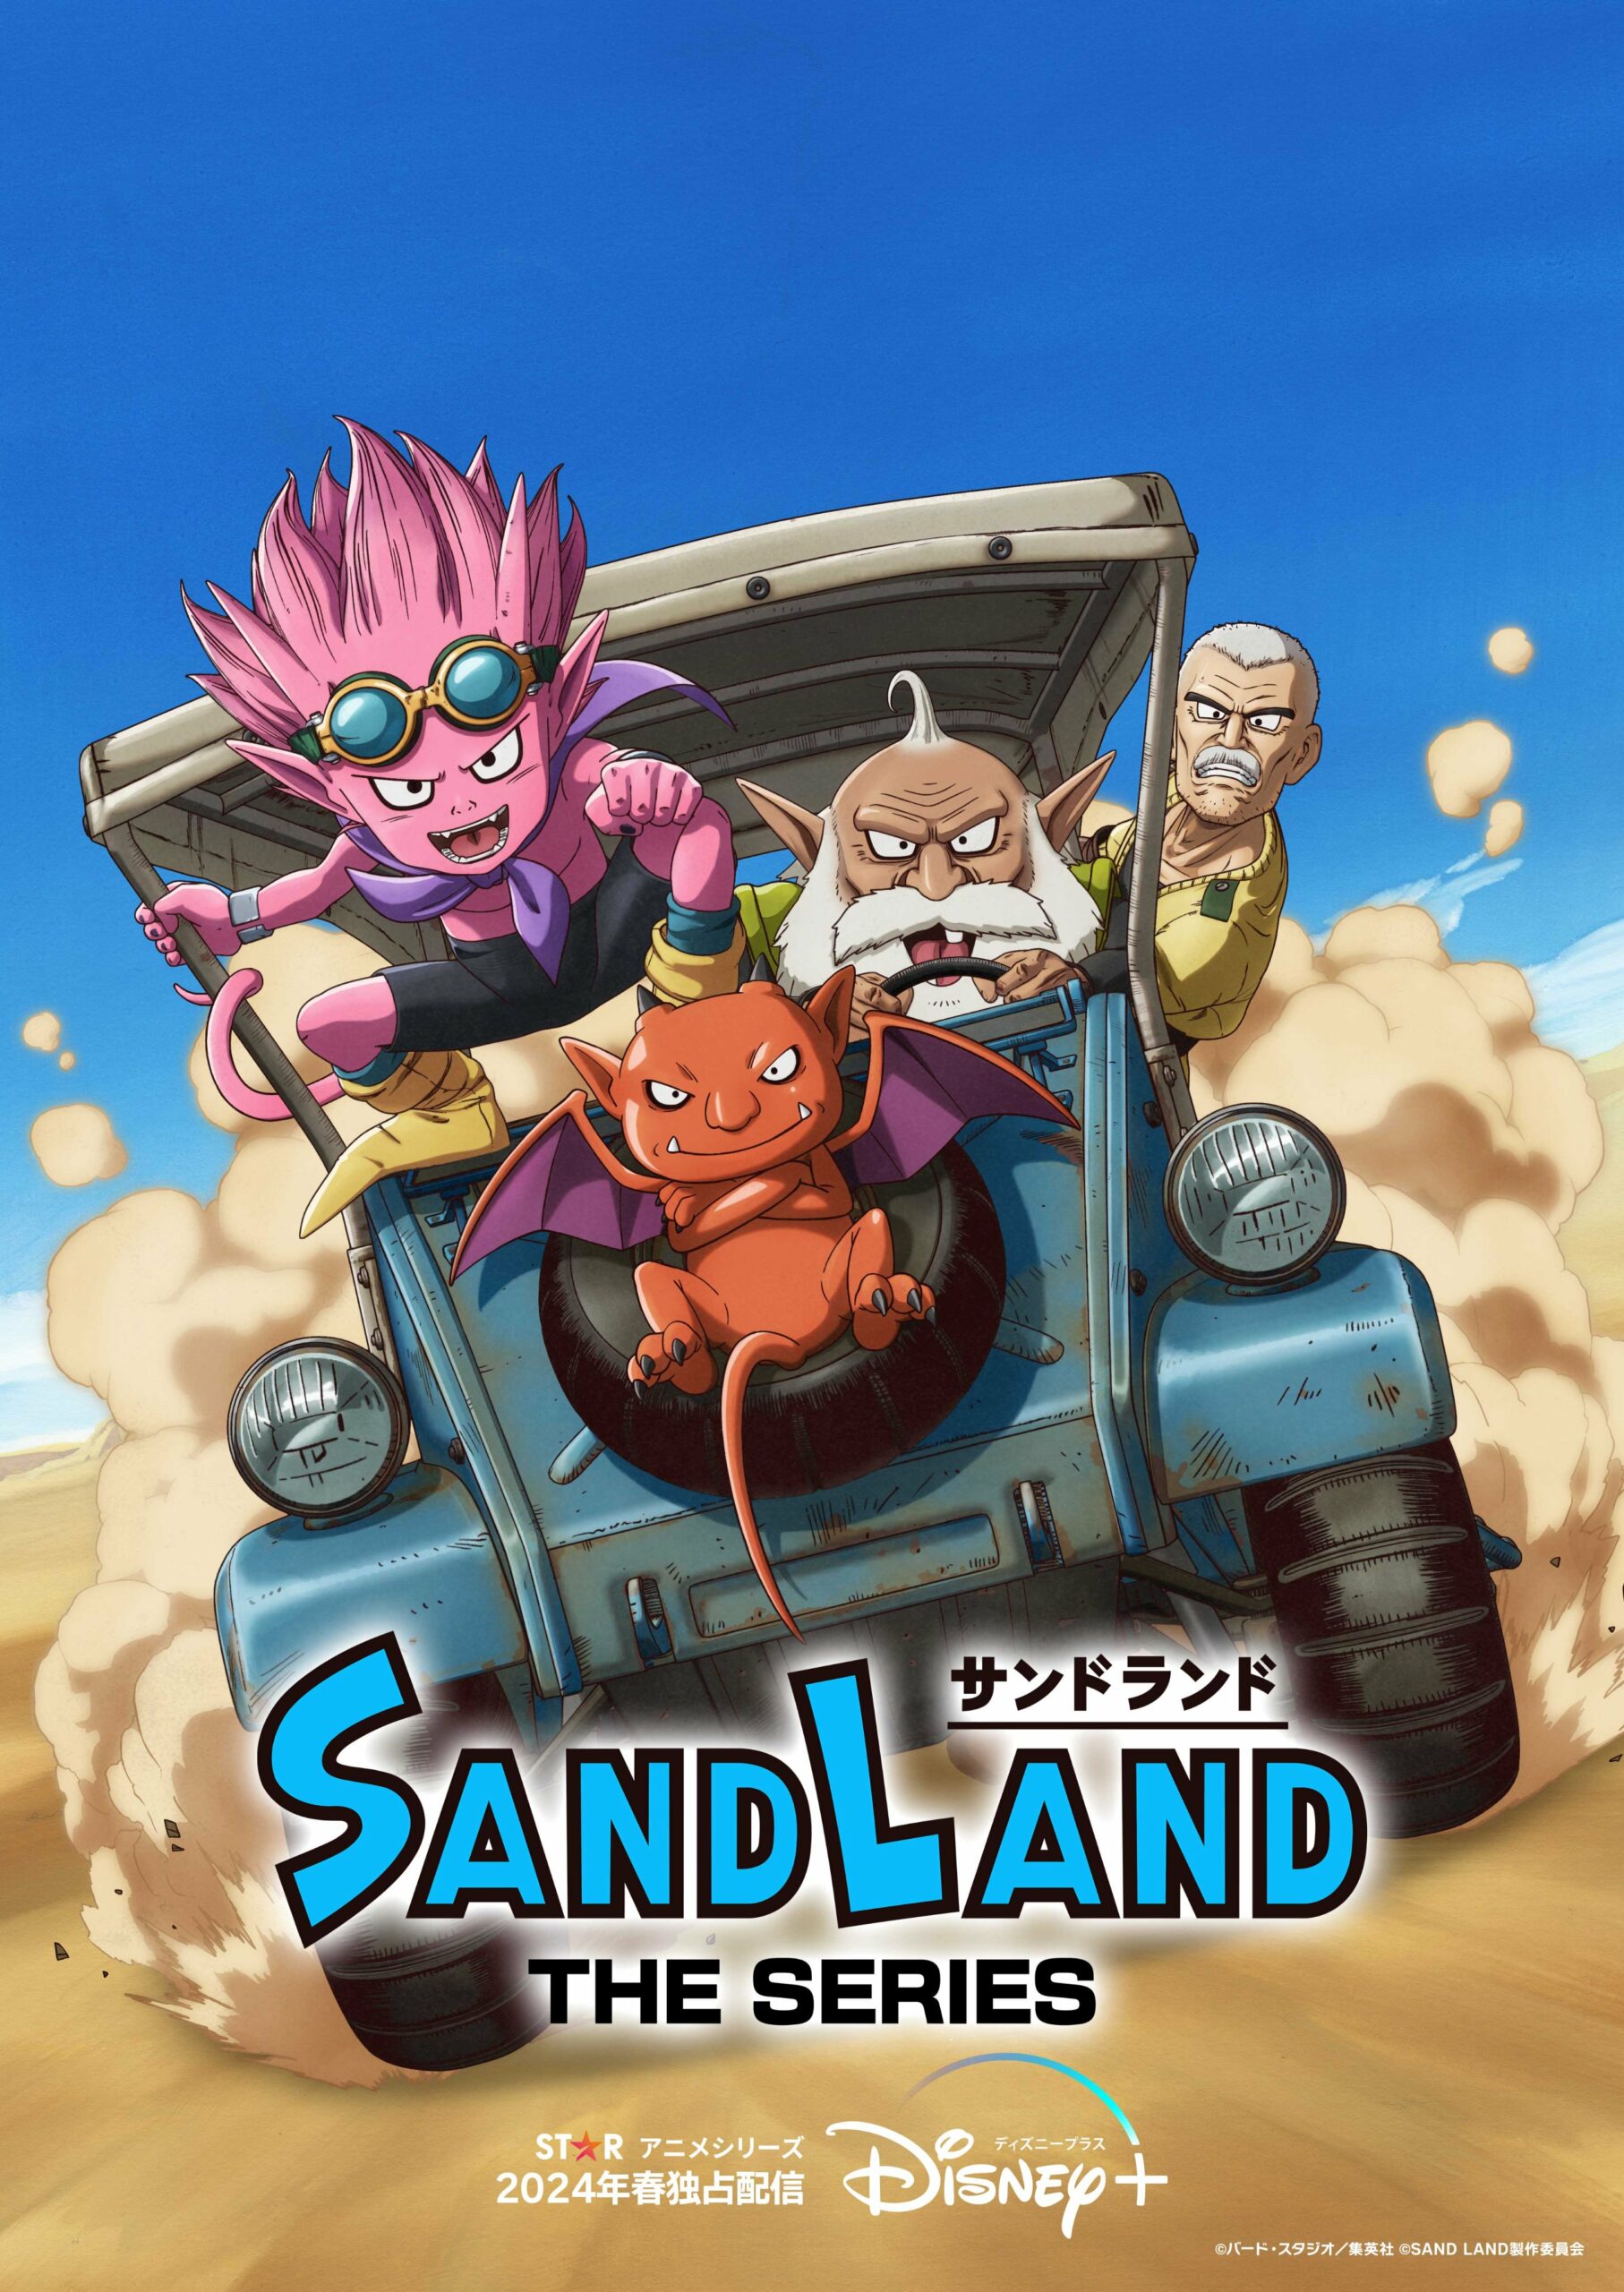 Sand land, akira toriyama, film, teaser, trailer, bande-annonce, série, anime, disney+, date de sortie, avril 2024, anime printemps 2024, dragon ball, 